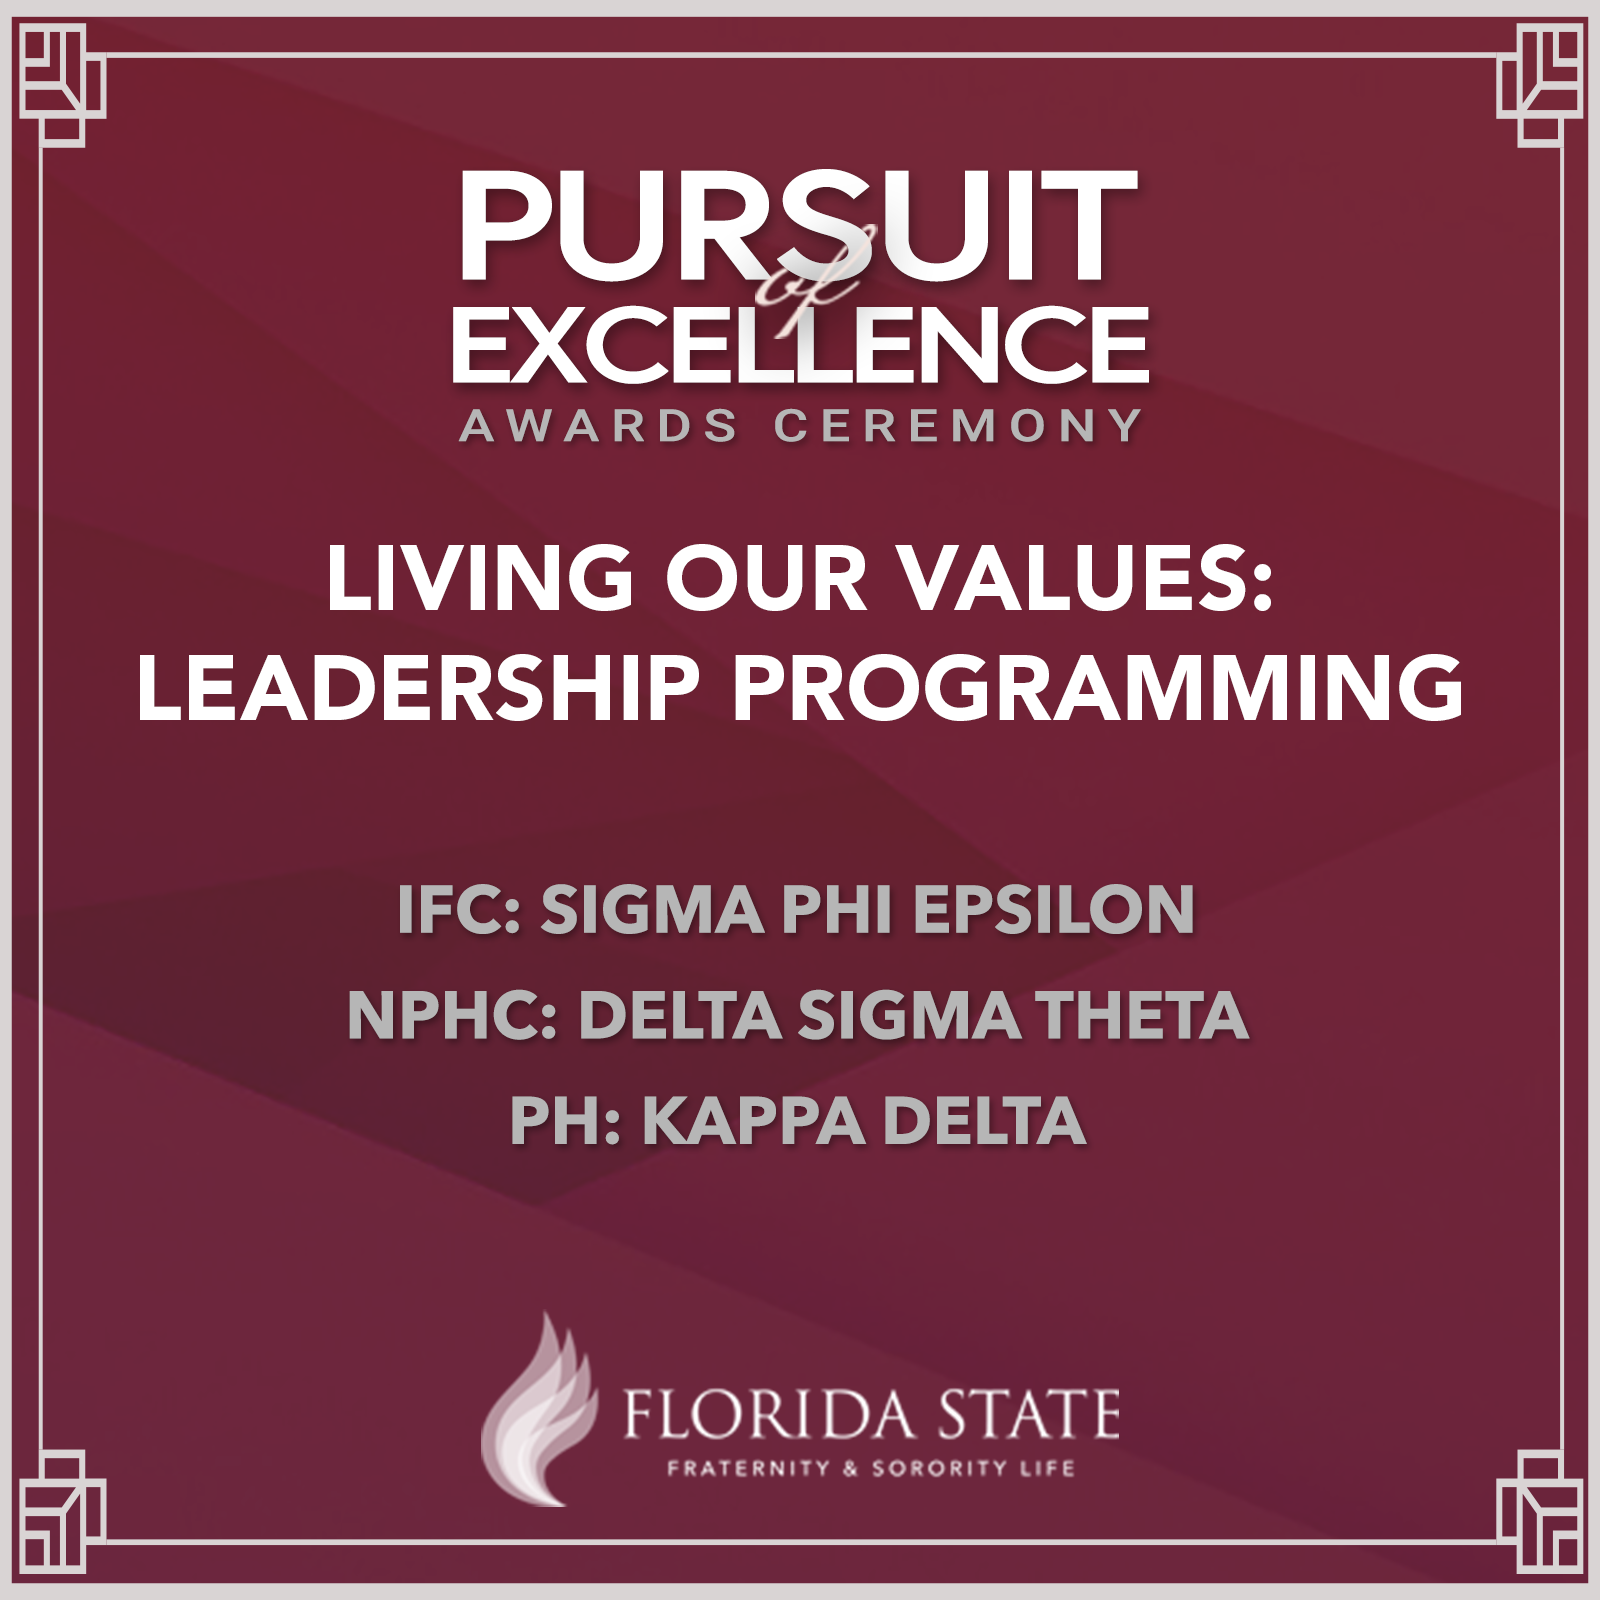 Living our Values: Leadership Programming Winners - Sigma Phi Epsilon, Delta Sigma Theta, Kappa Delta